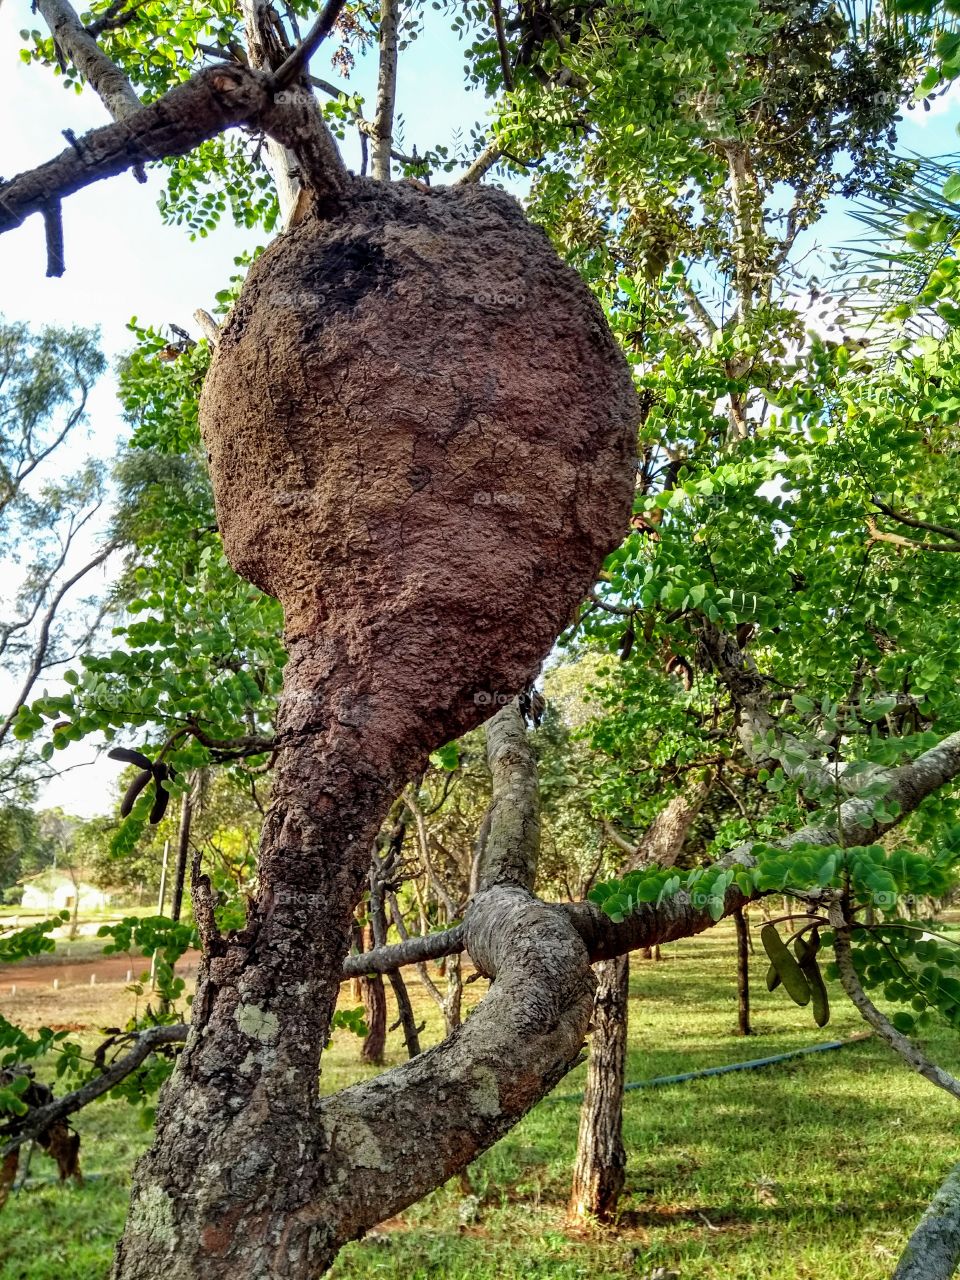 Big hive on a tree